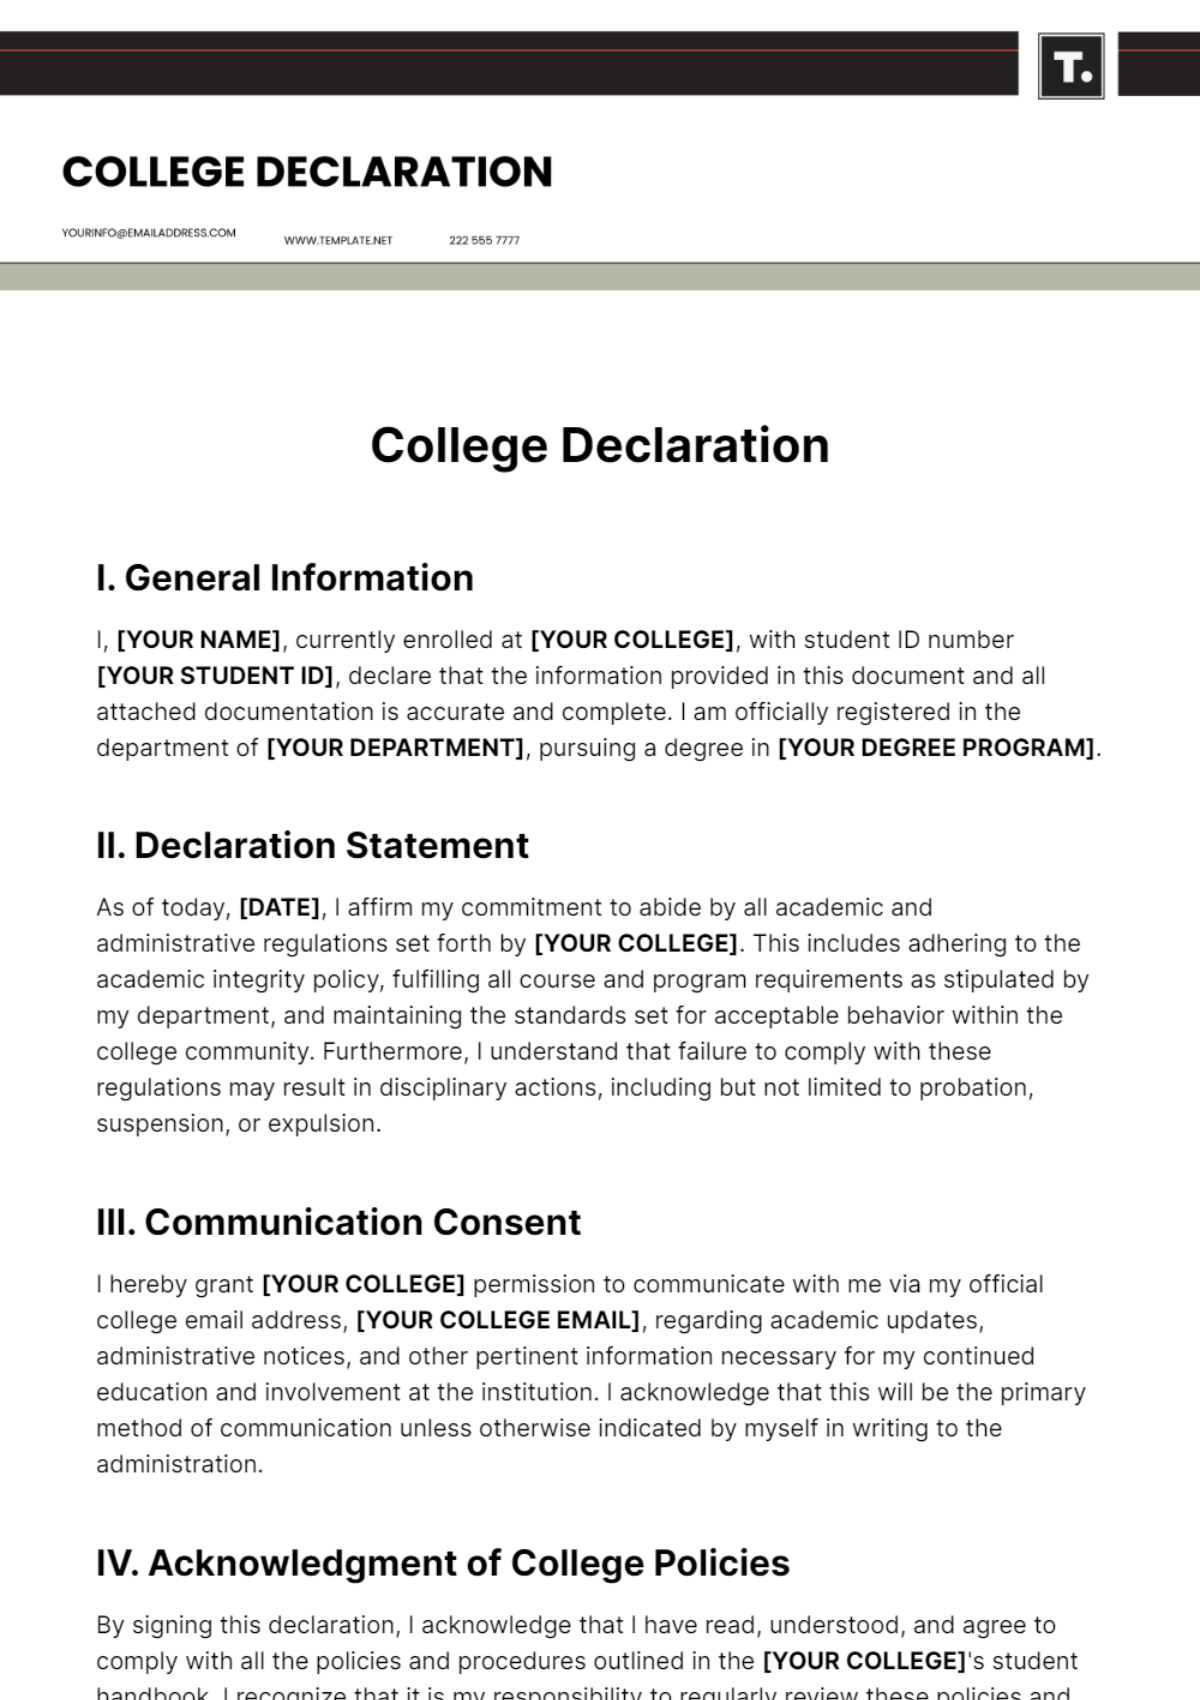 College Declaration Template